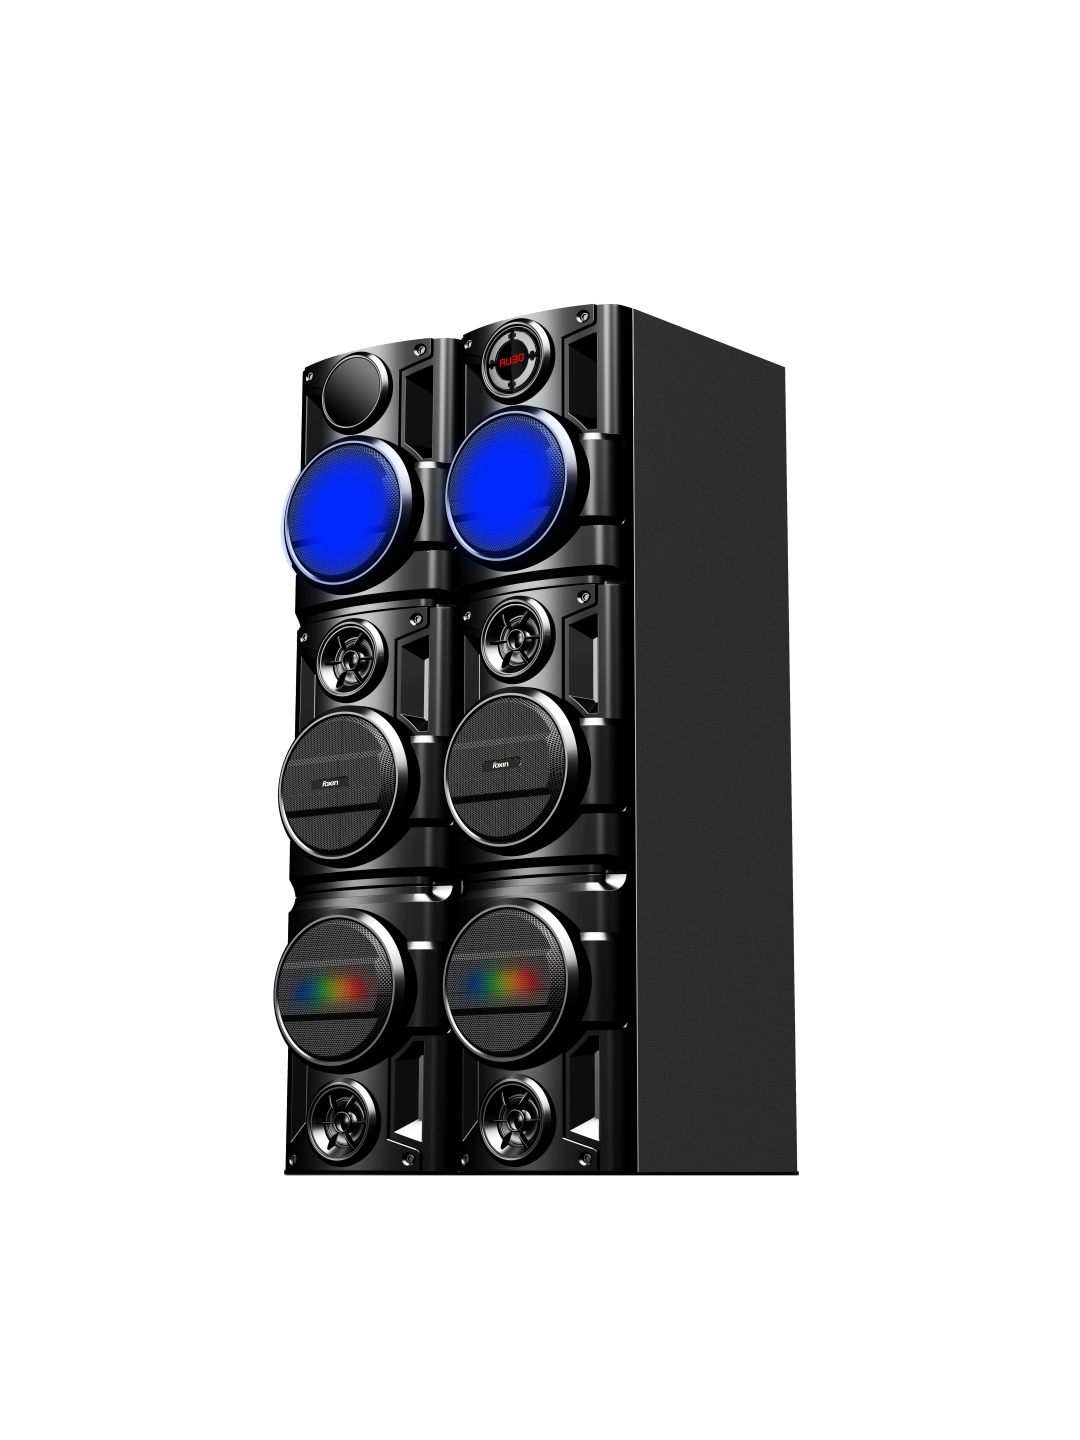 Foxin 16400 DOMINATOR Multimedia Tower Speakers 140 Watt